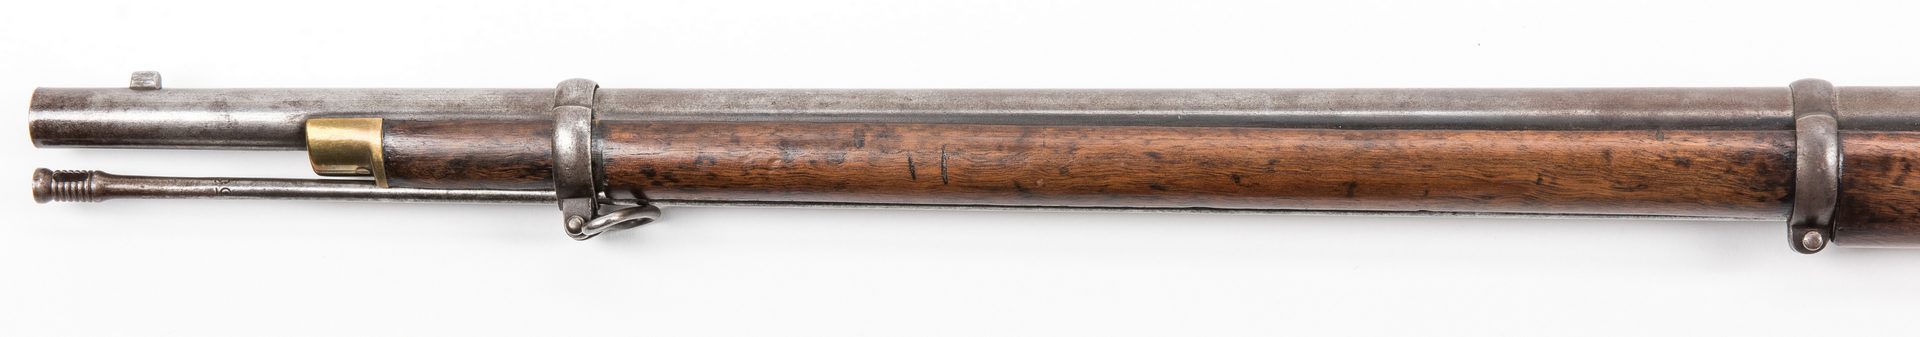 Lot 522: Civil War 1853 Pattern Rifled Enfield Tower Rifle